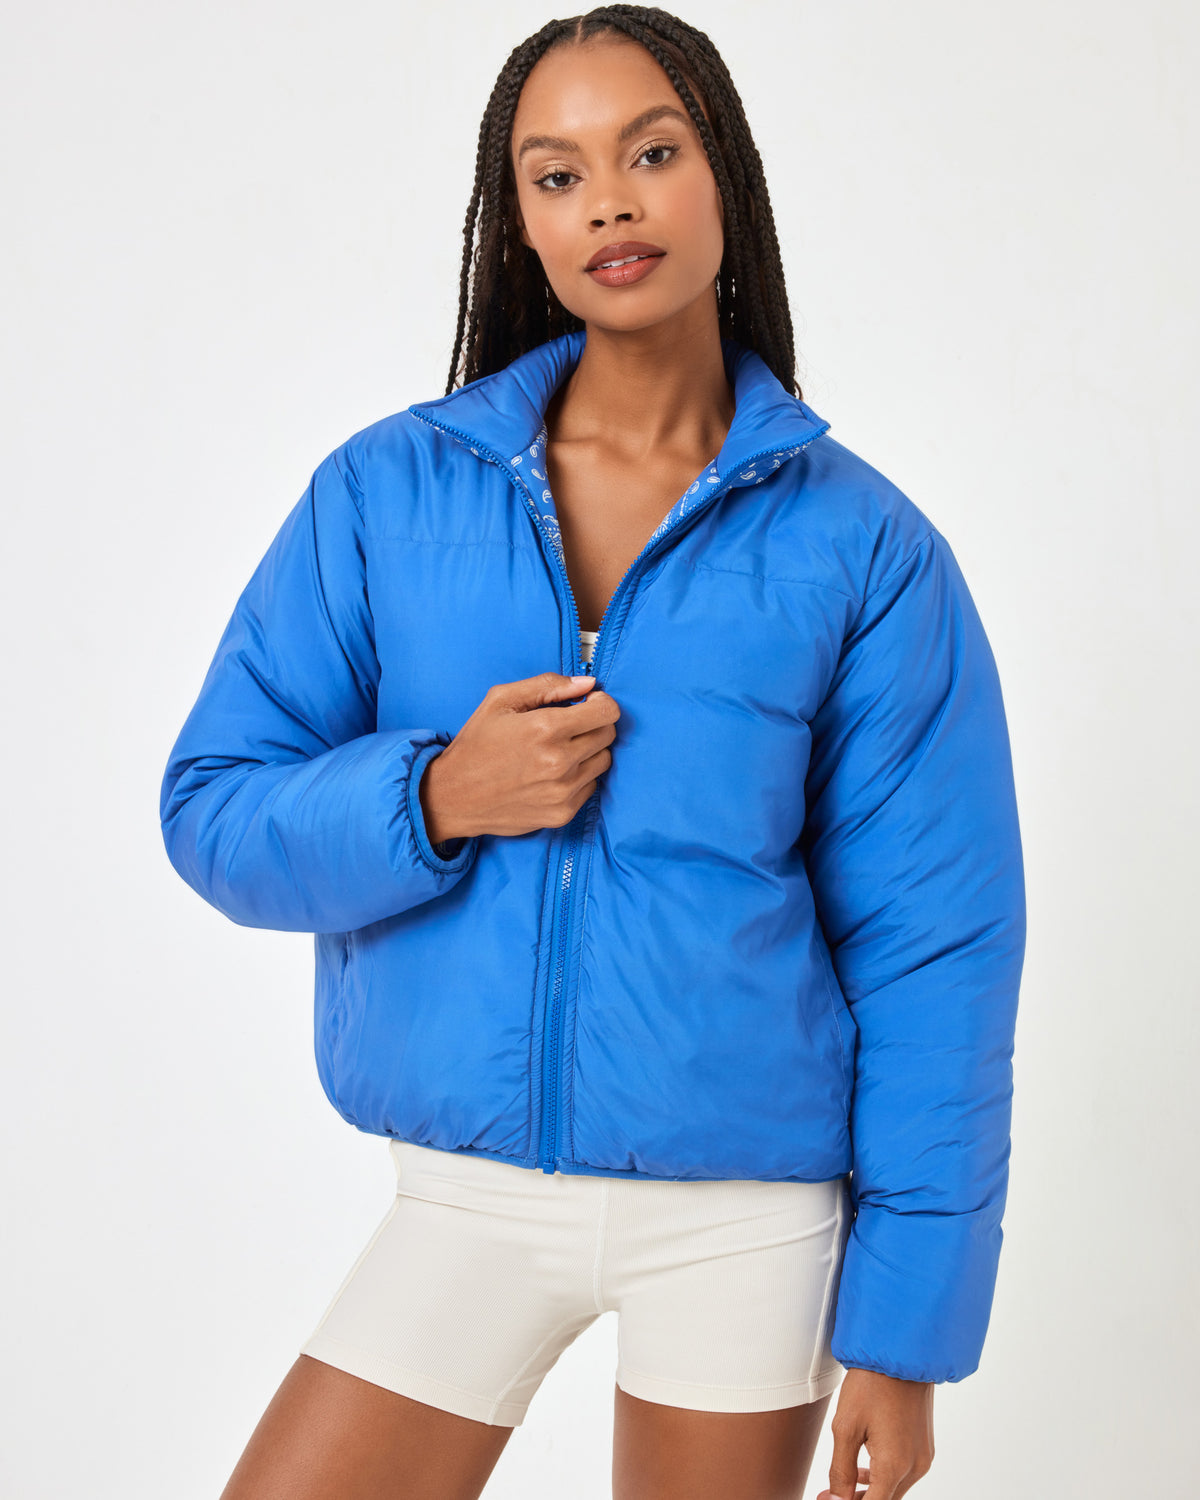 Elevation Jacket Bandana | Model: Taelor (size: S) | Hover